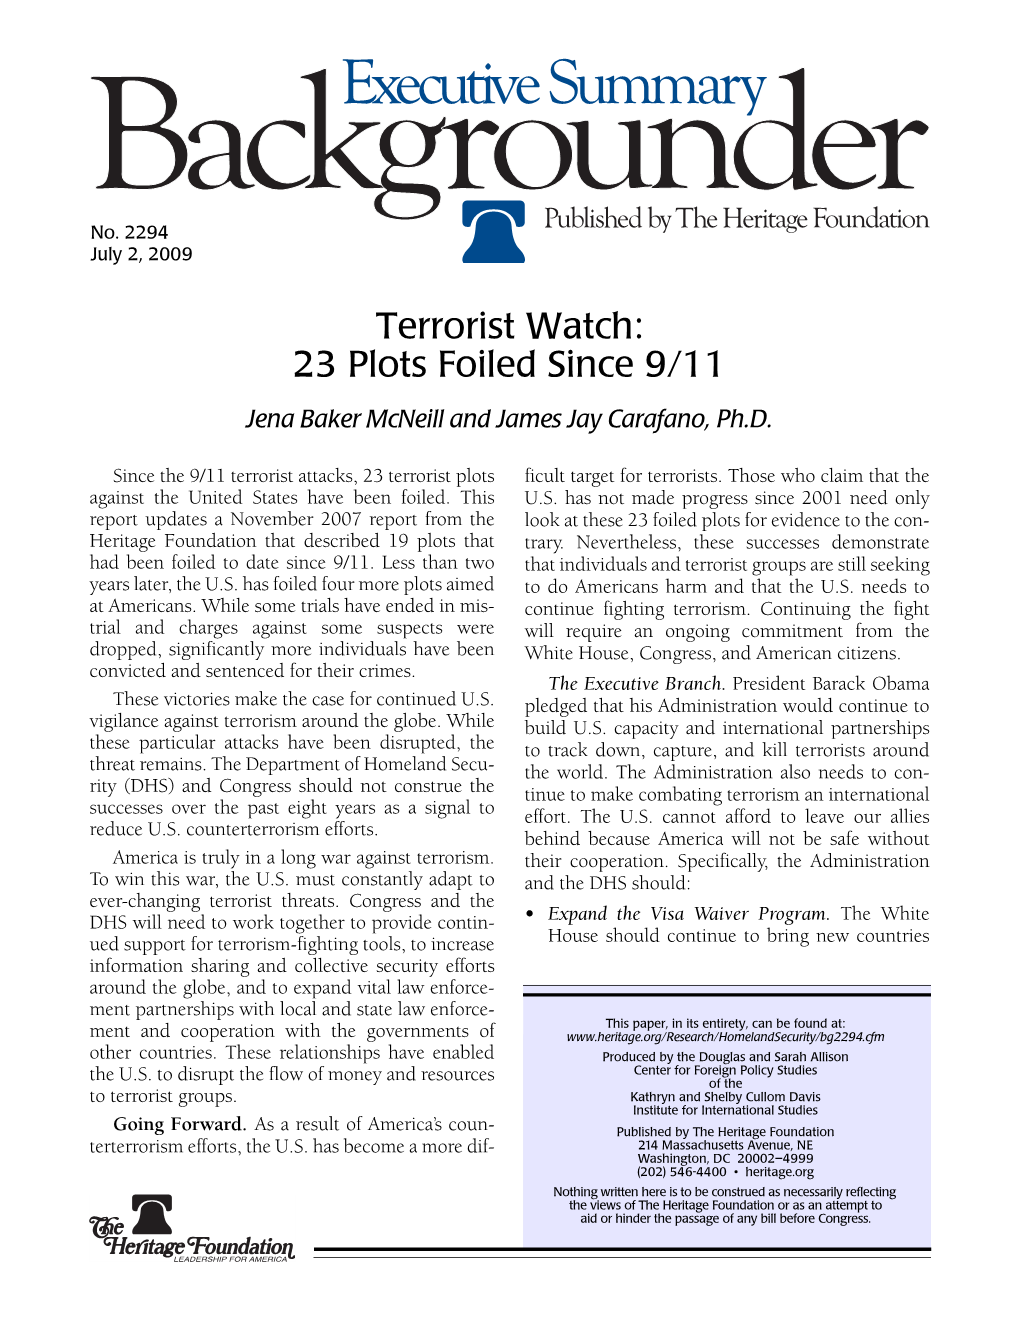 Terrorist Watch: 23 Plots Foiled Since 9/11 Jena Baker Mcneill and James Jay Carafano, Ph.D